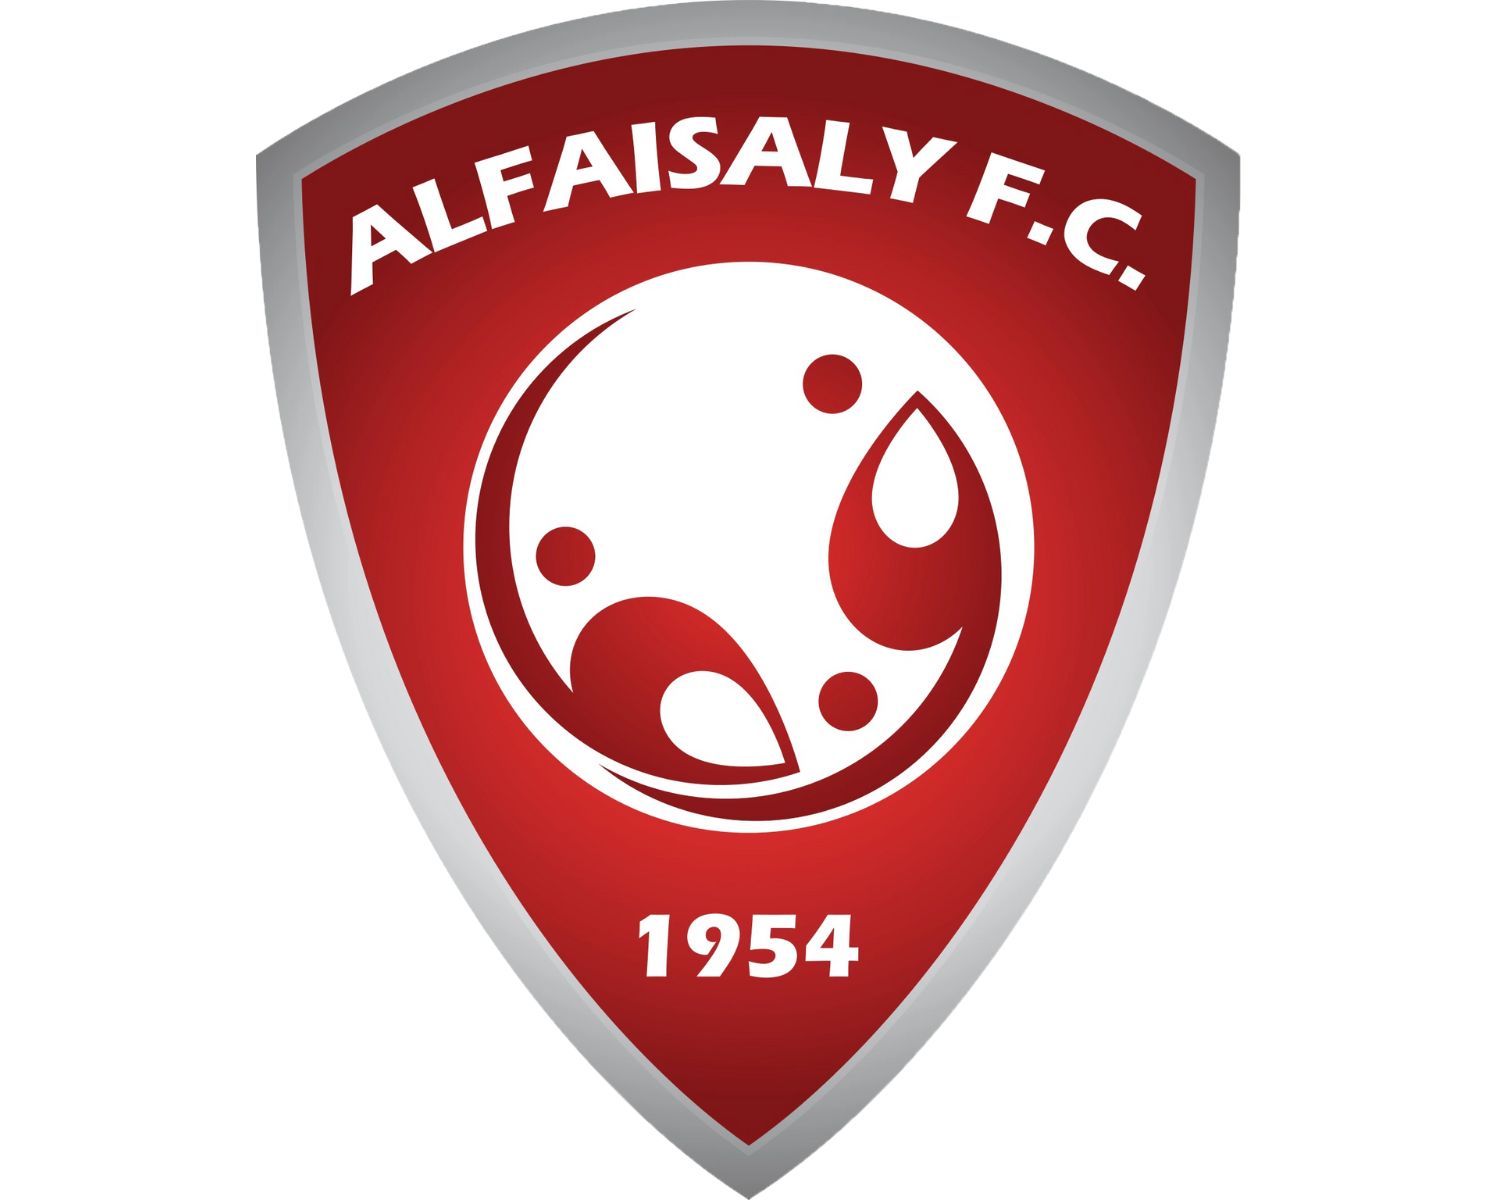 Al-Faisaly FC: 22 Football Club Facts - Facts.net